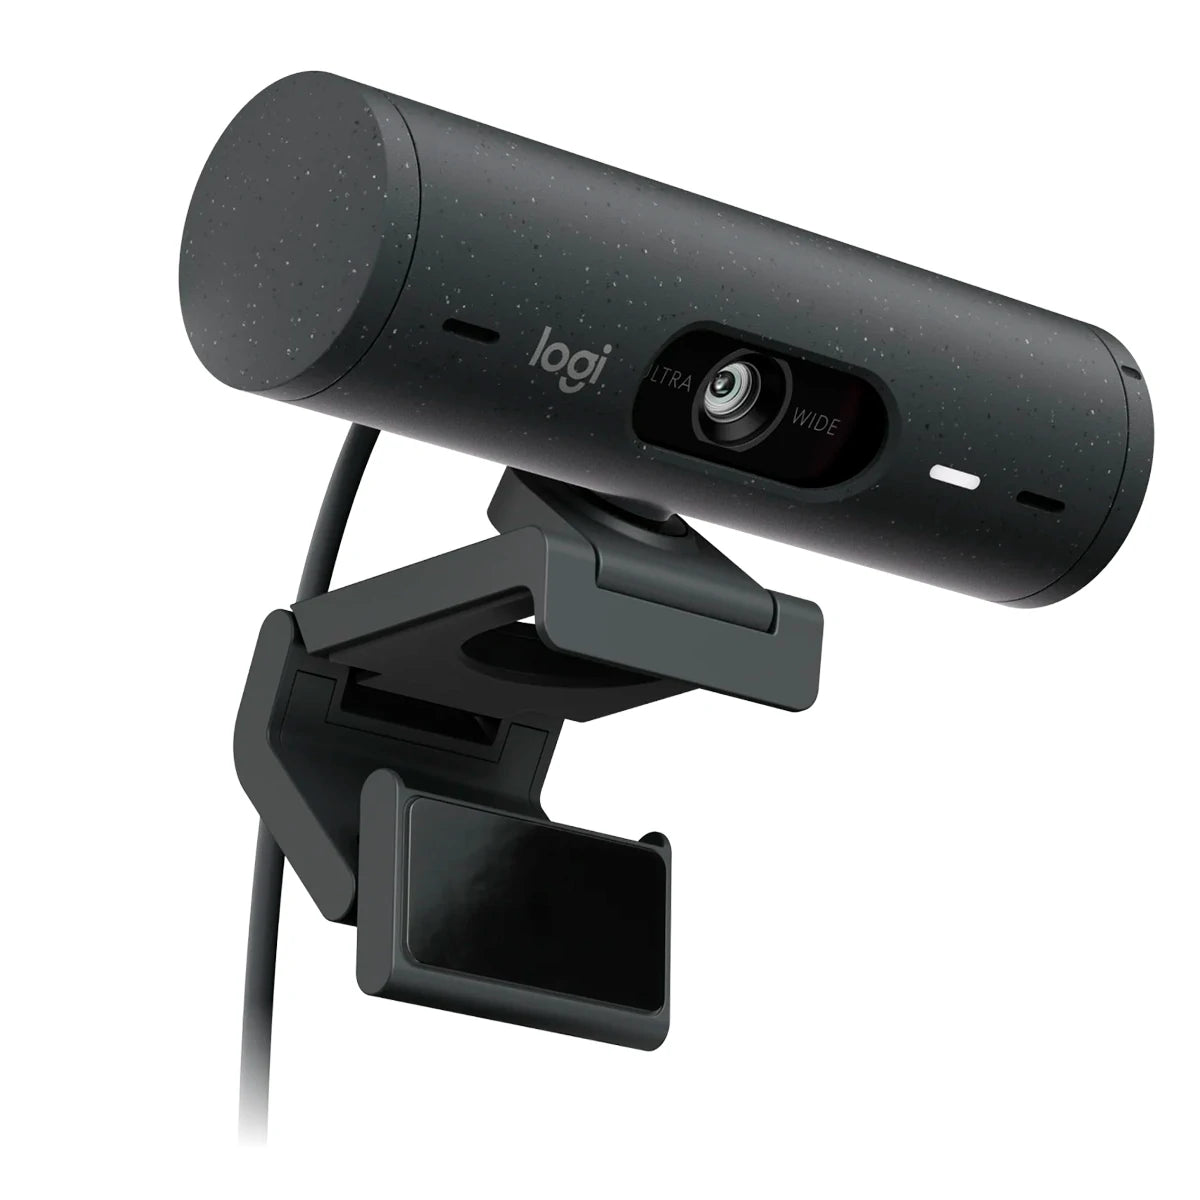 Camara Video Conferencing Logitech Brio 500 FHD 1080 Correc. Ilum. Encuadre Auto. Grafito